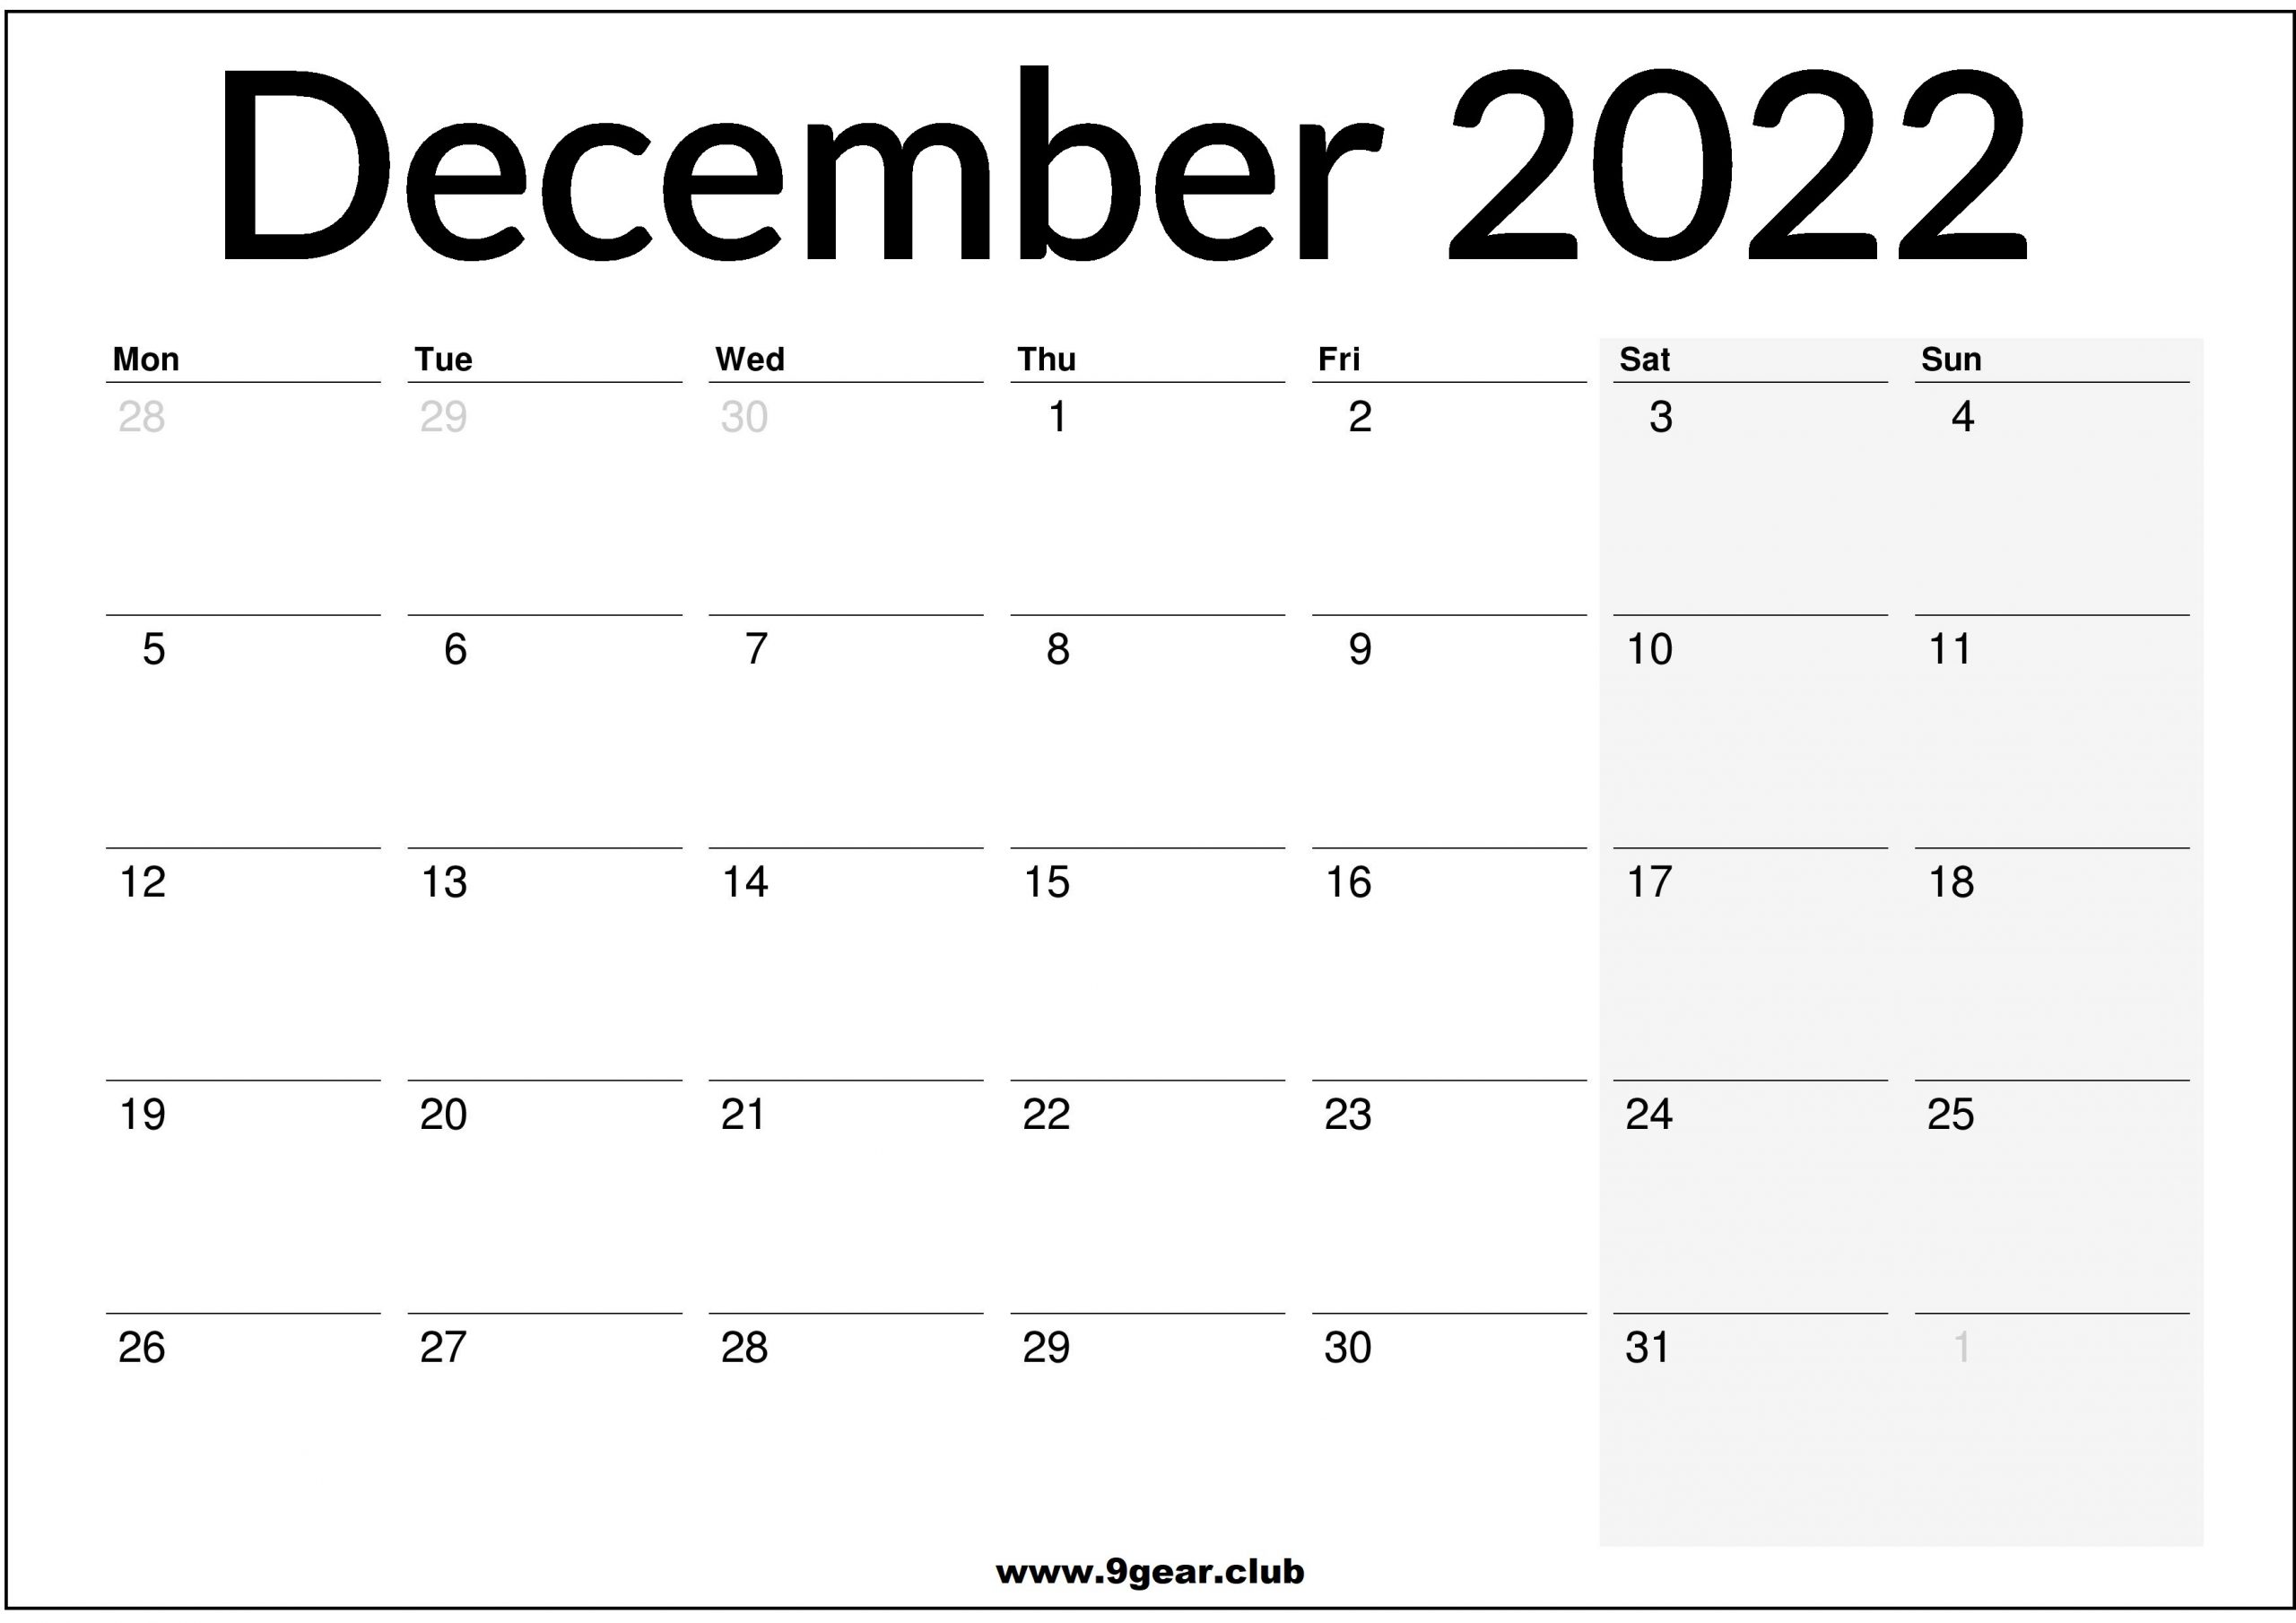 December 2022 Uk Calendar Printable - Printable Calendars 2022 December 2022 Calendar Free Printable